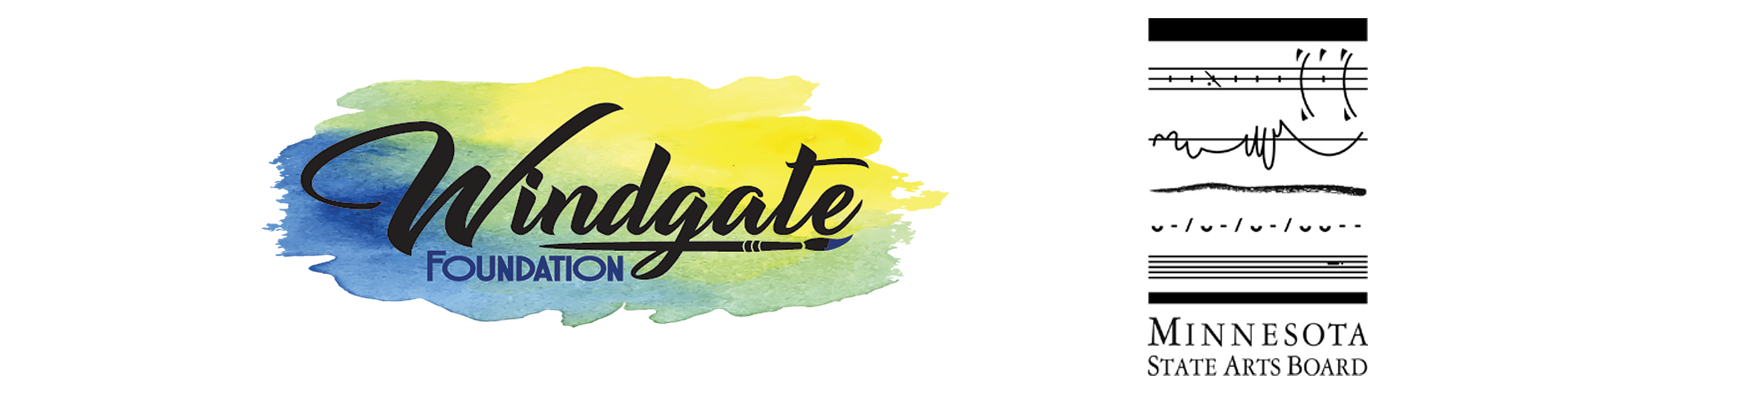 Windgate Foundation logo and Minnesota State Arts Board logo